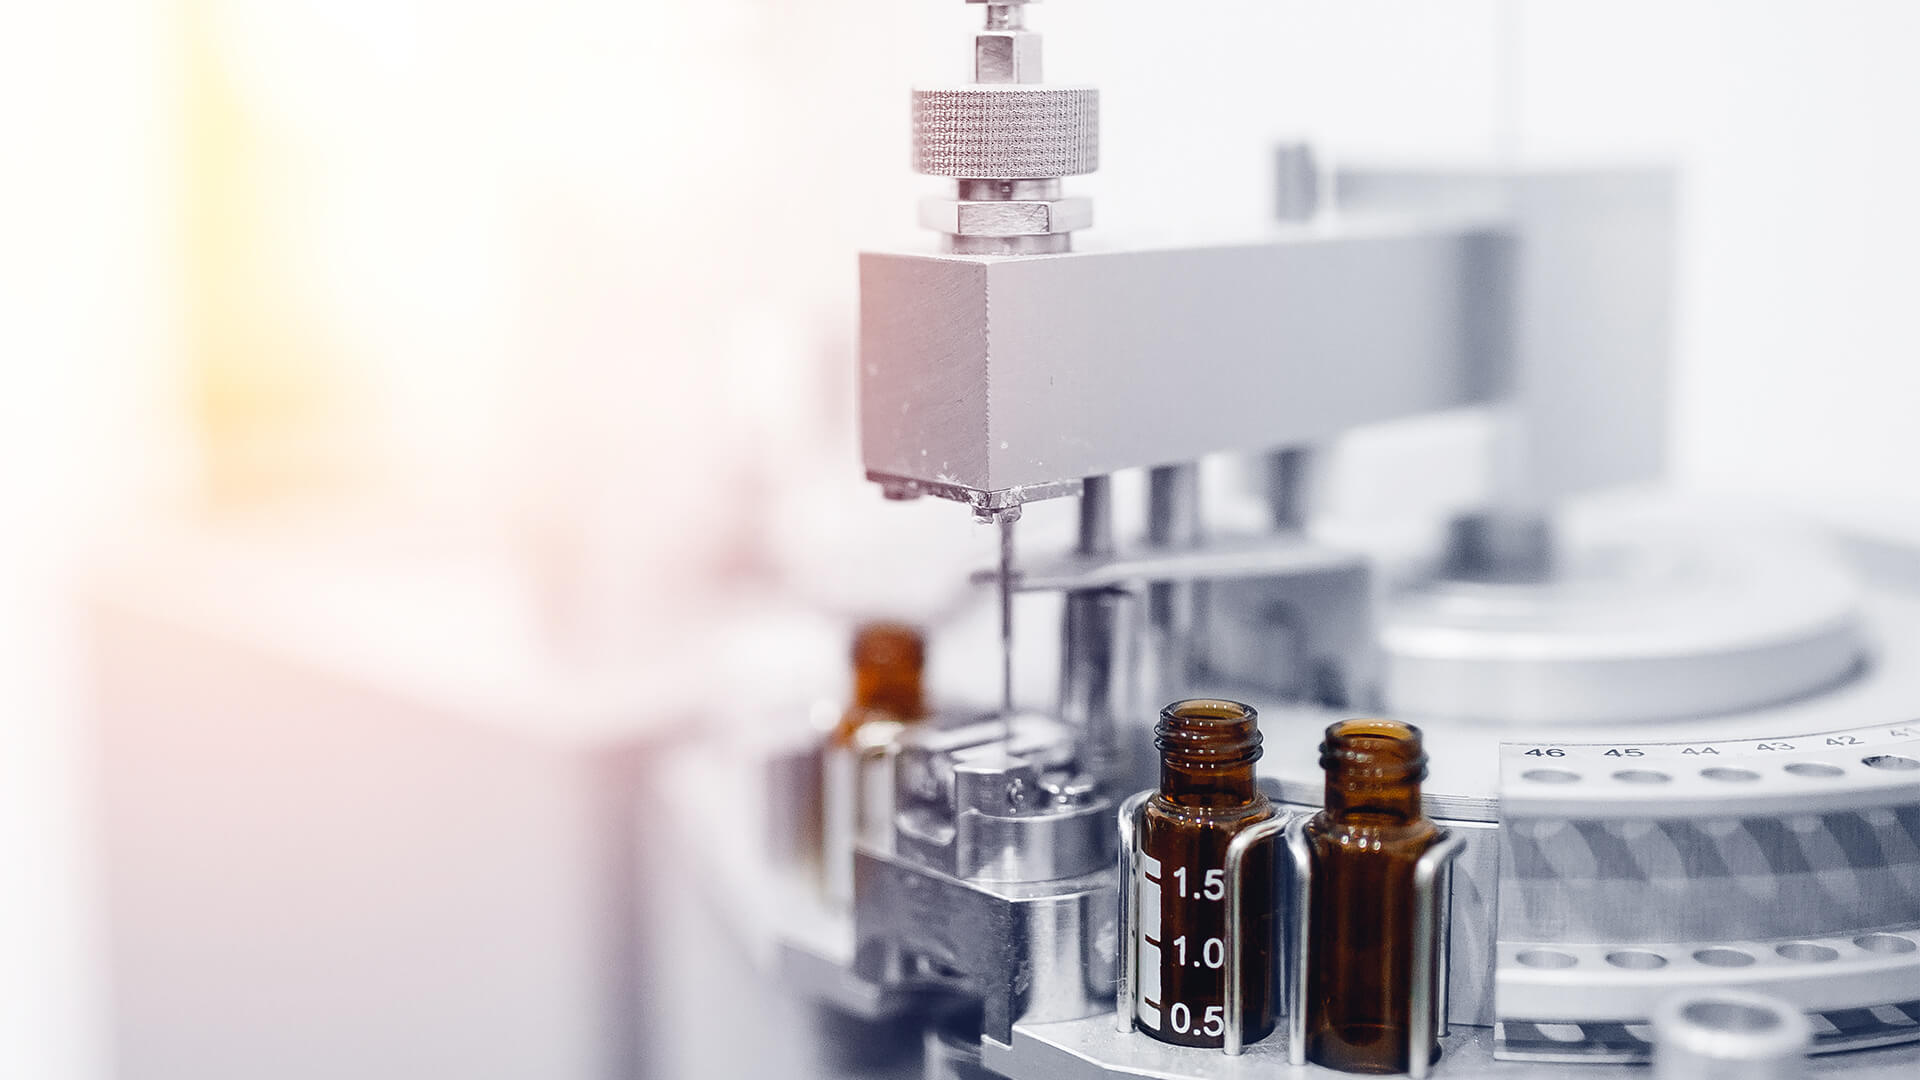 COVID-19 Vaccine Race Boosts Brand Values Across Pharma Giants